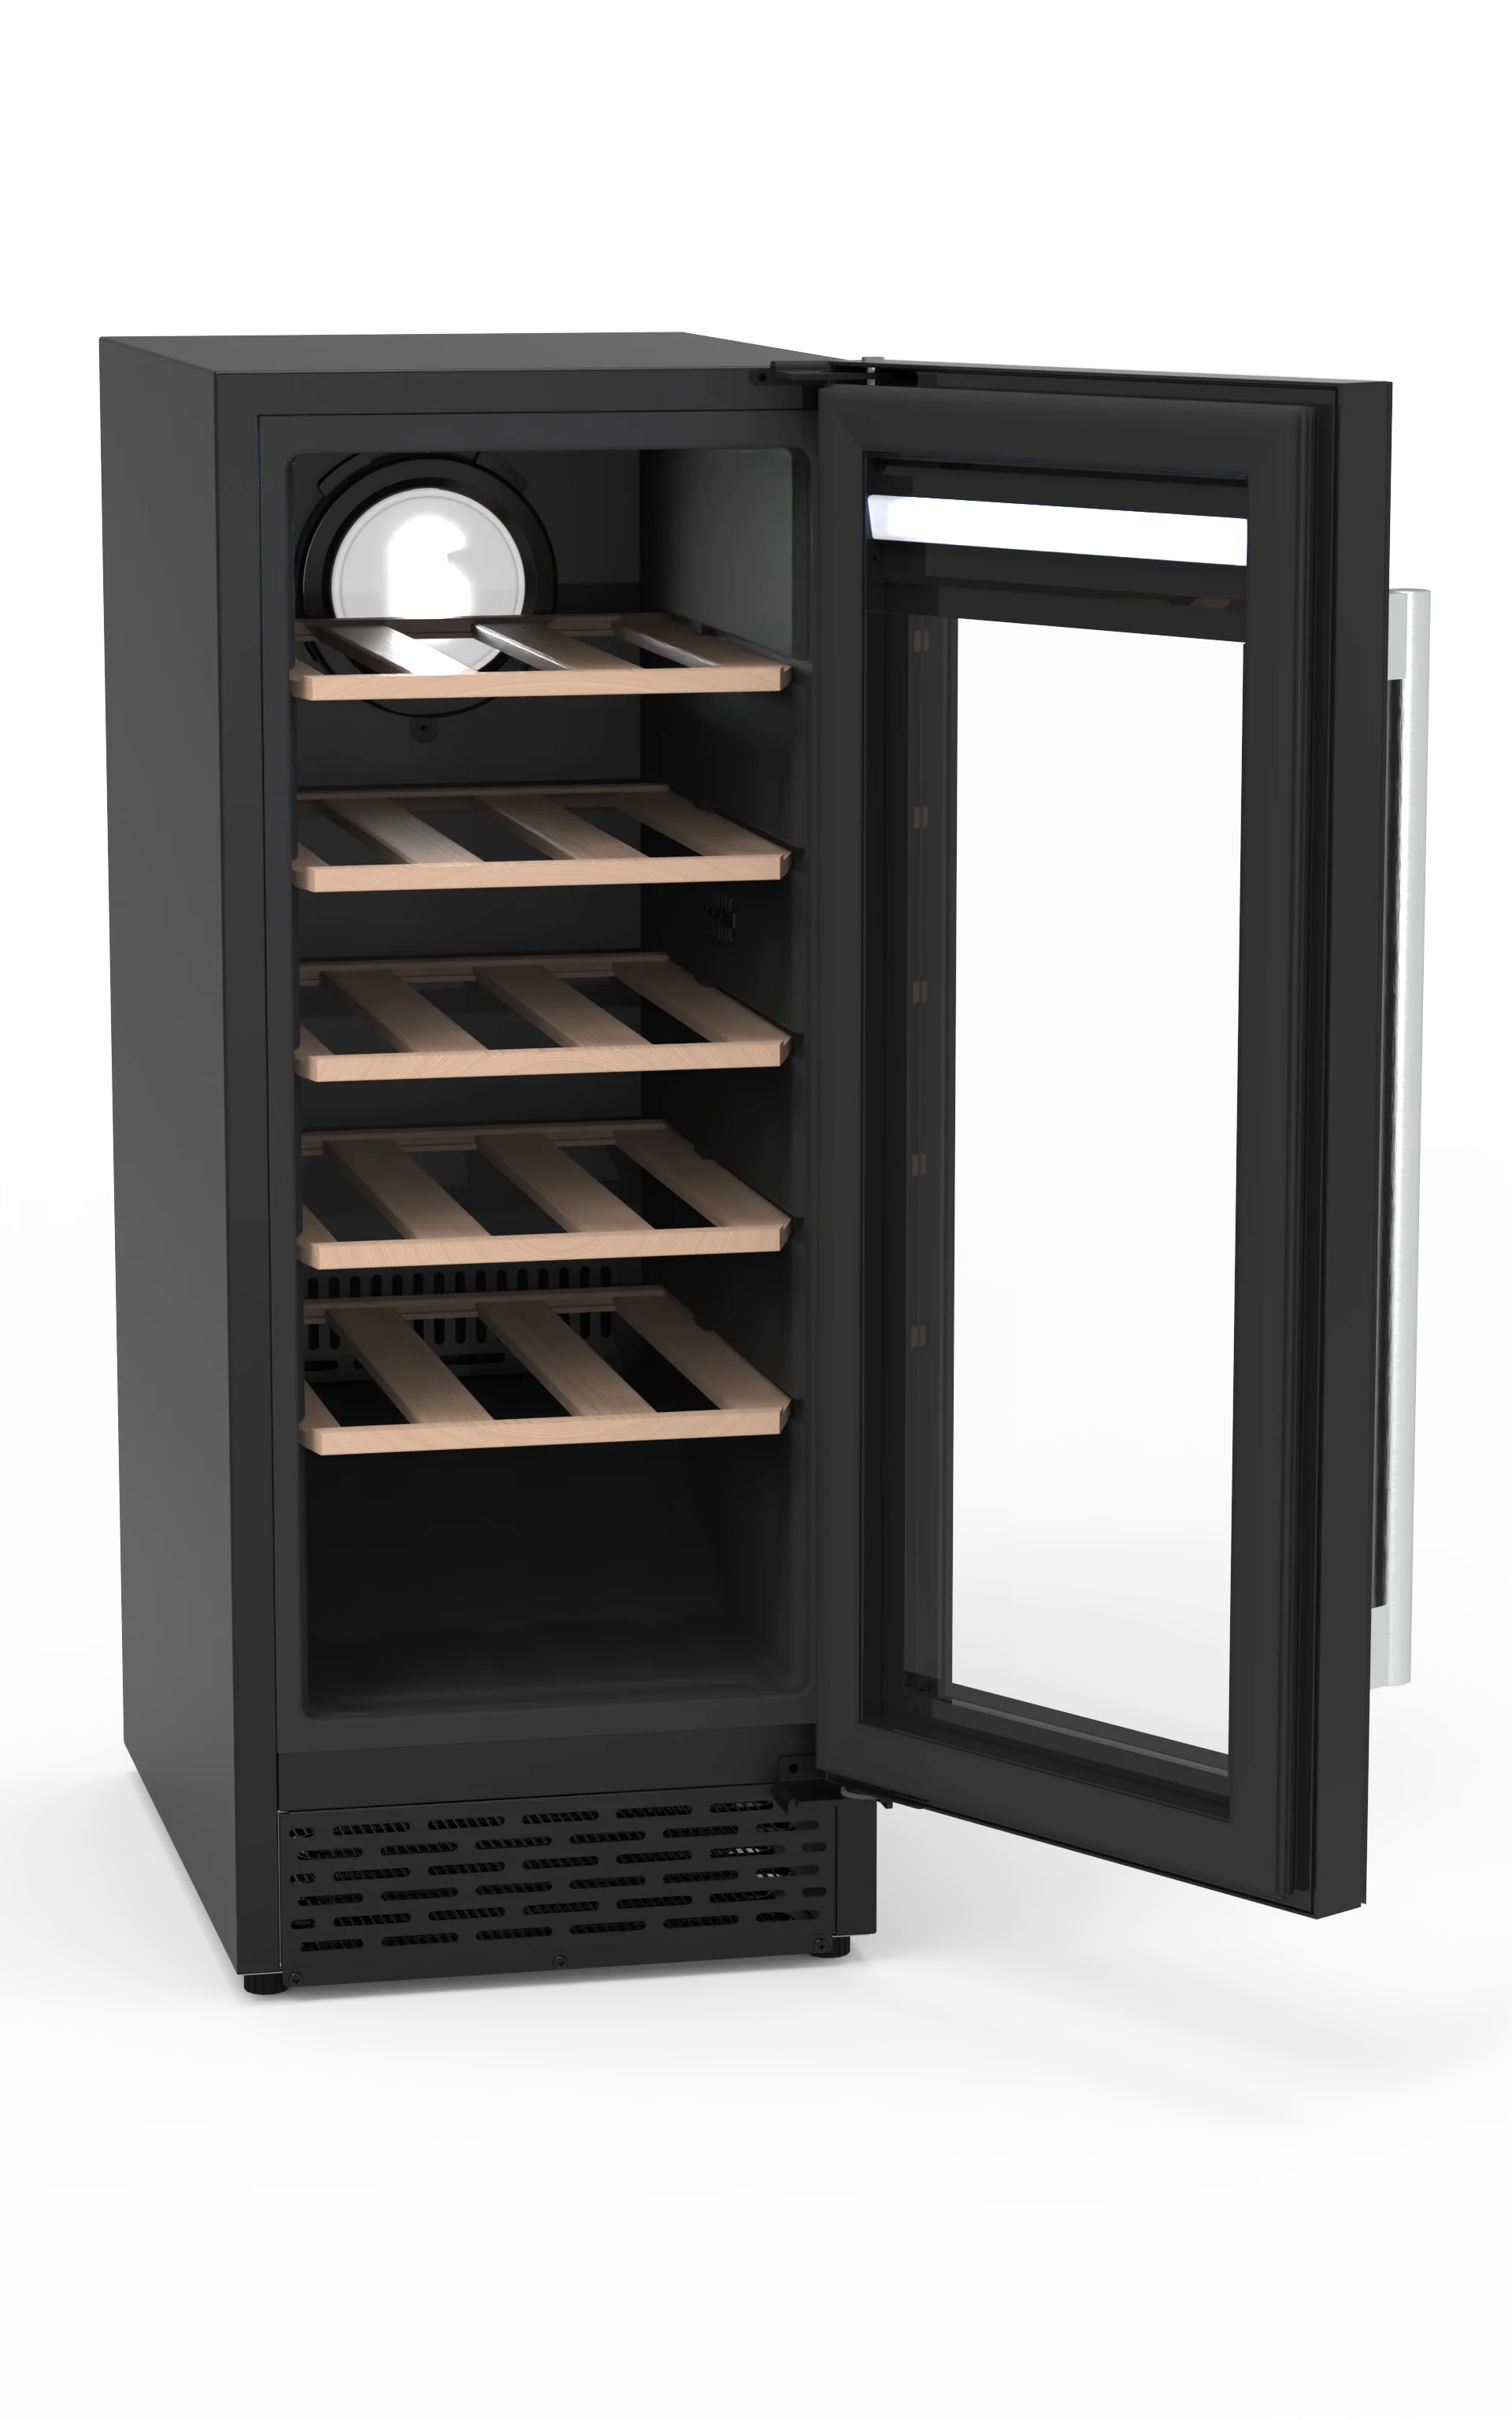 Best Selling Cellar Design Cooler Led Dispenser Refrigerator Countertop Wine Fridge